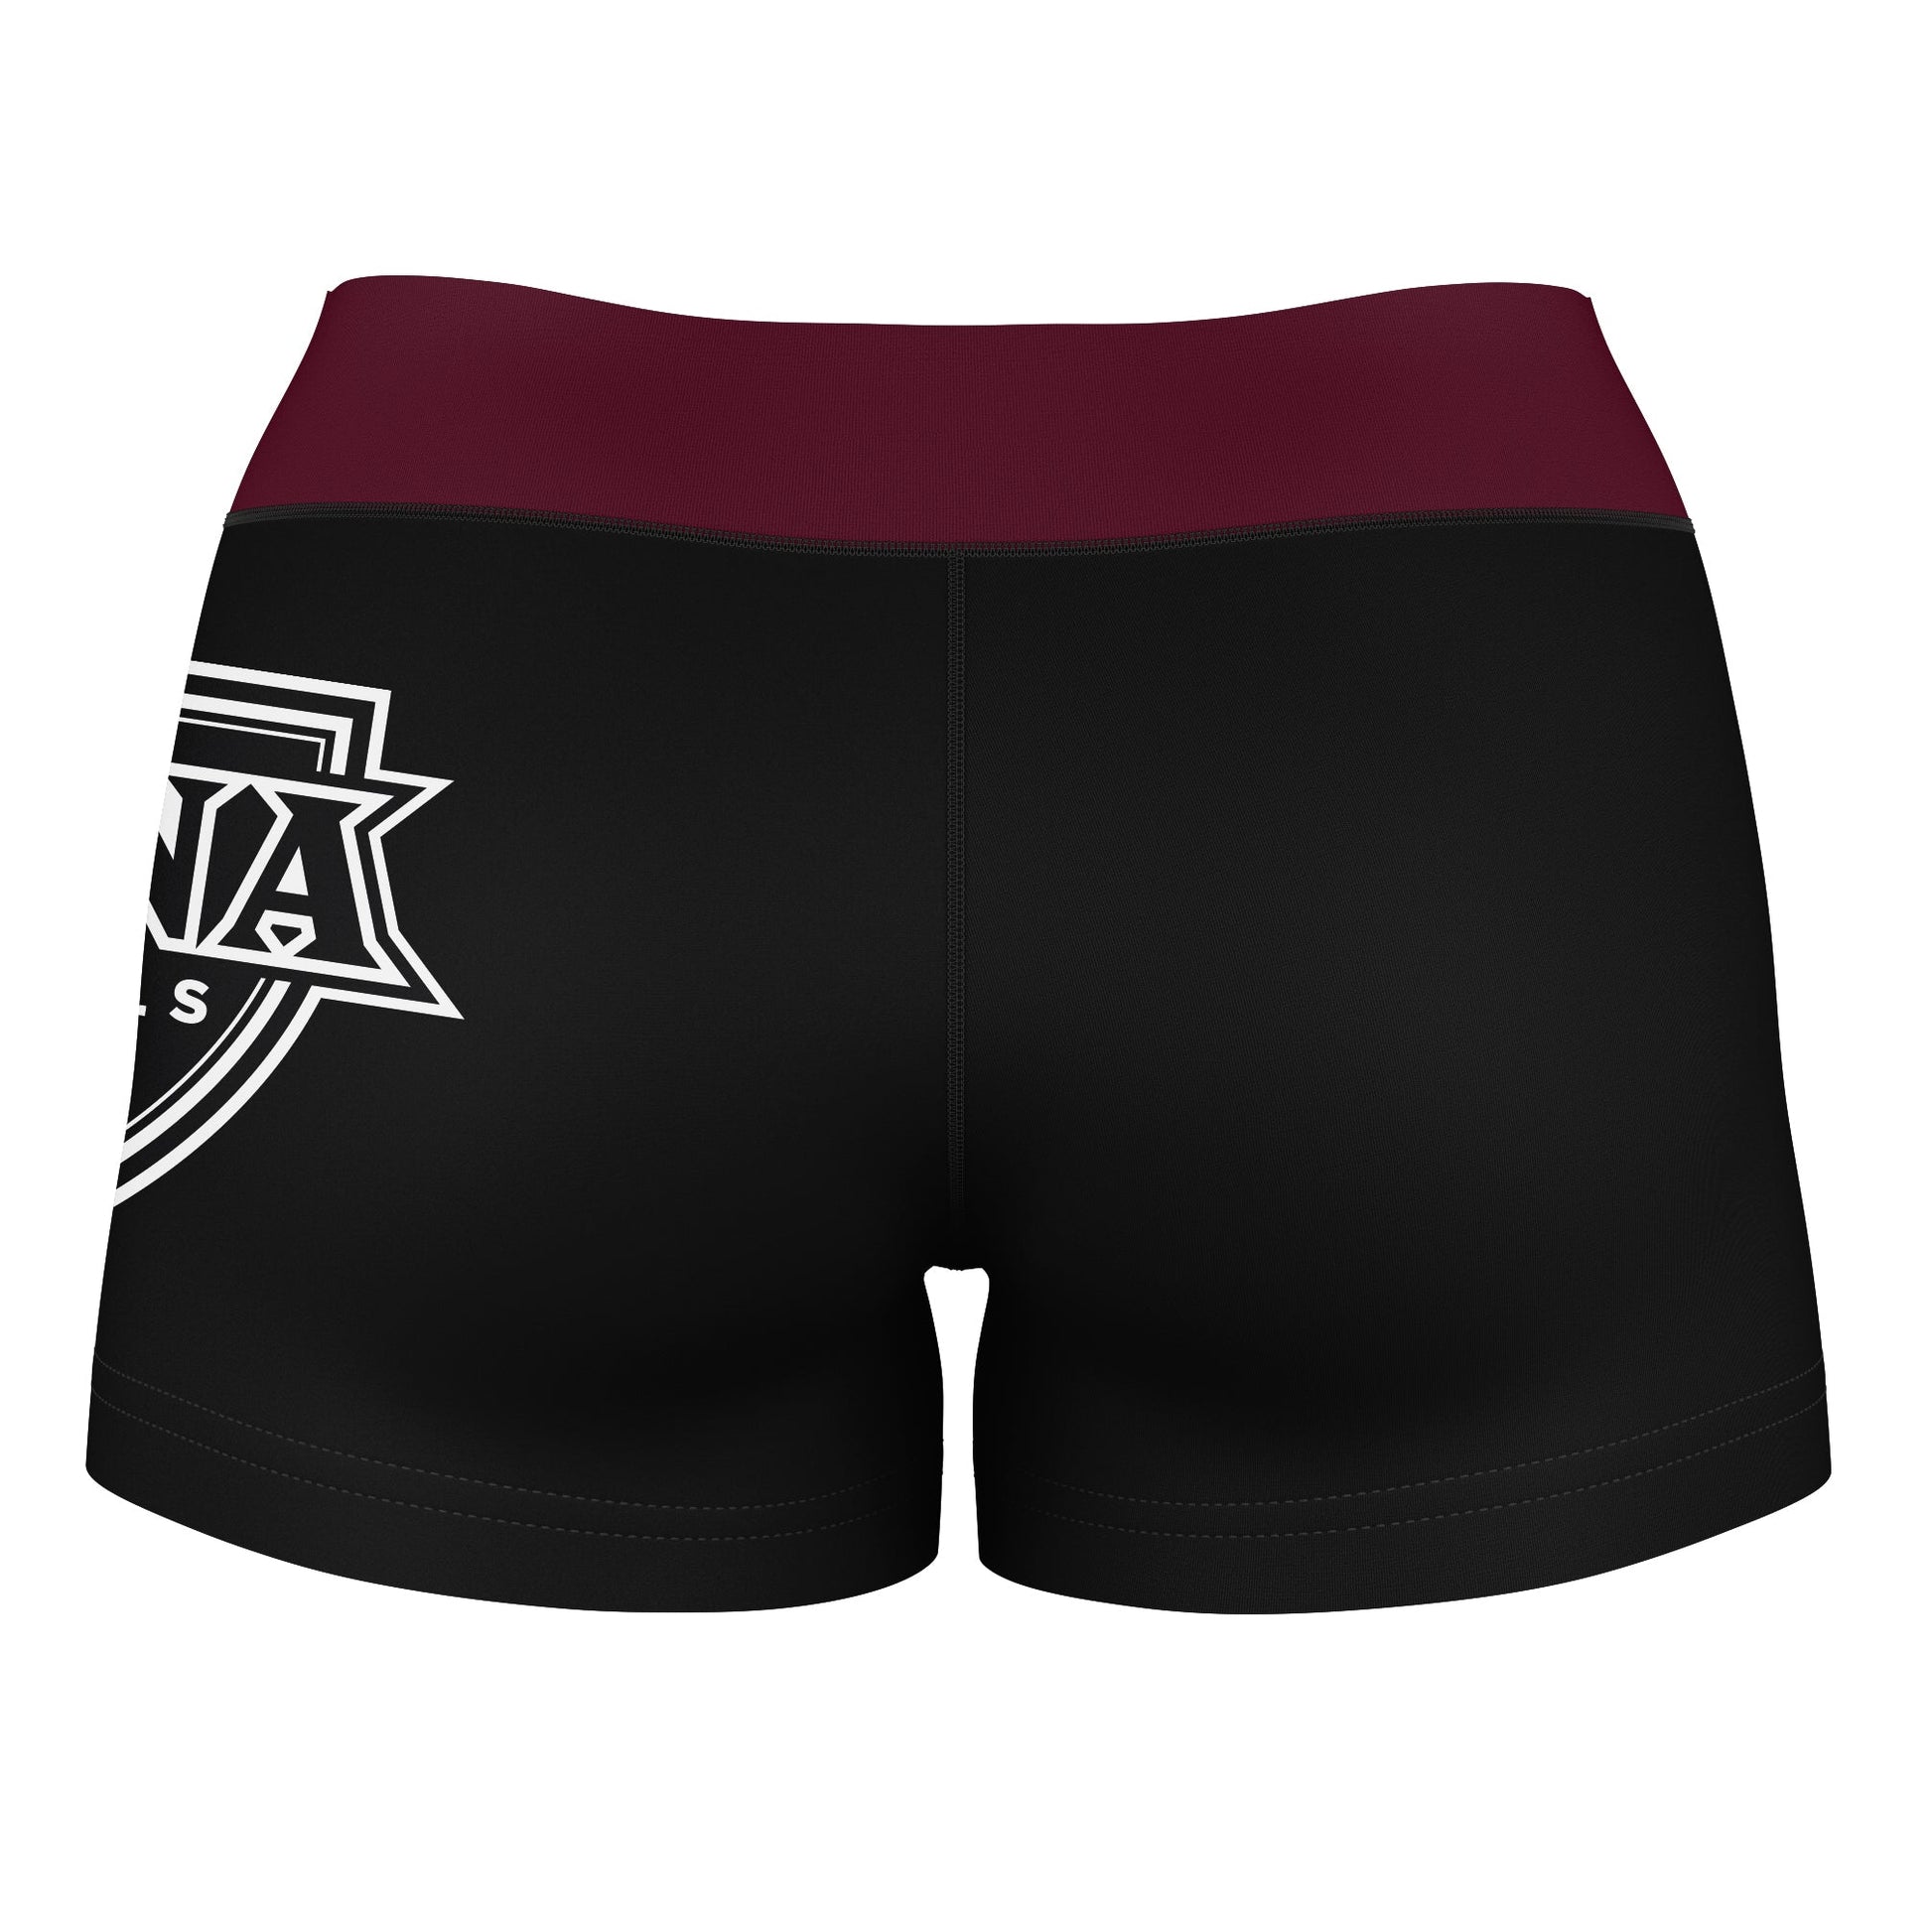 Iona Gaels Vive La Fete Logo on Thigh & Waistband Black & Maroon Women Yoga Booty Workout Shorts 3.75 Inseam - Vive La F̻te - Online Apparel Store